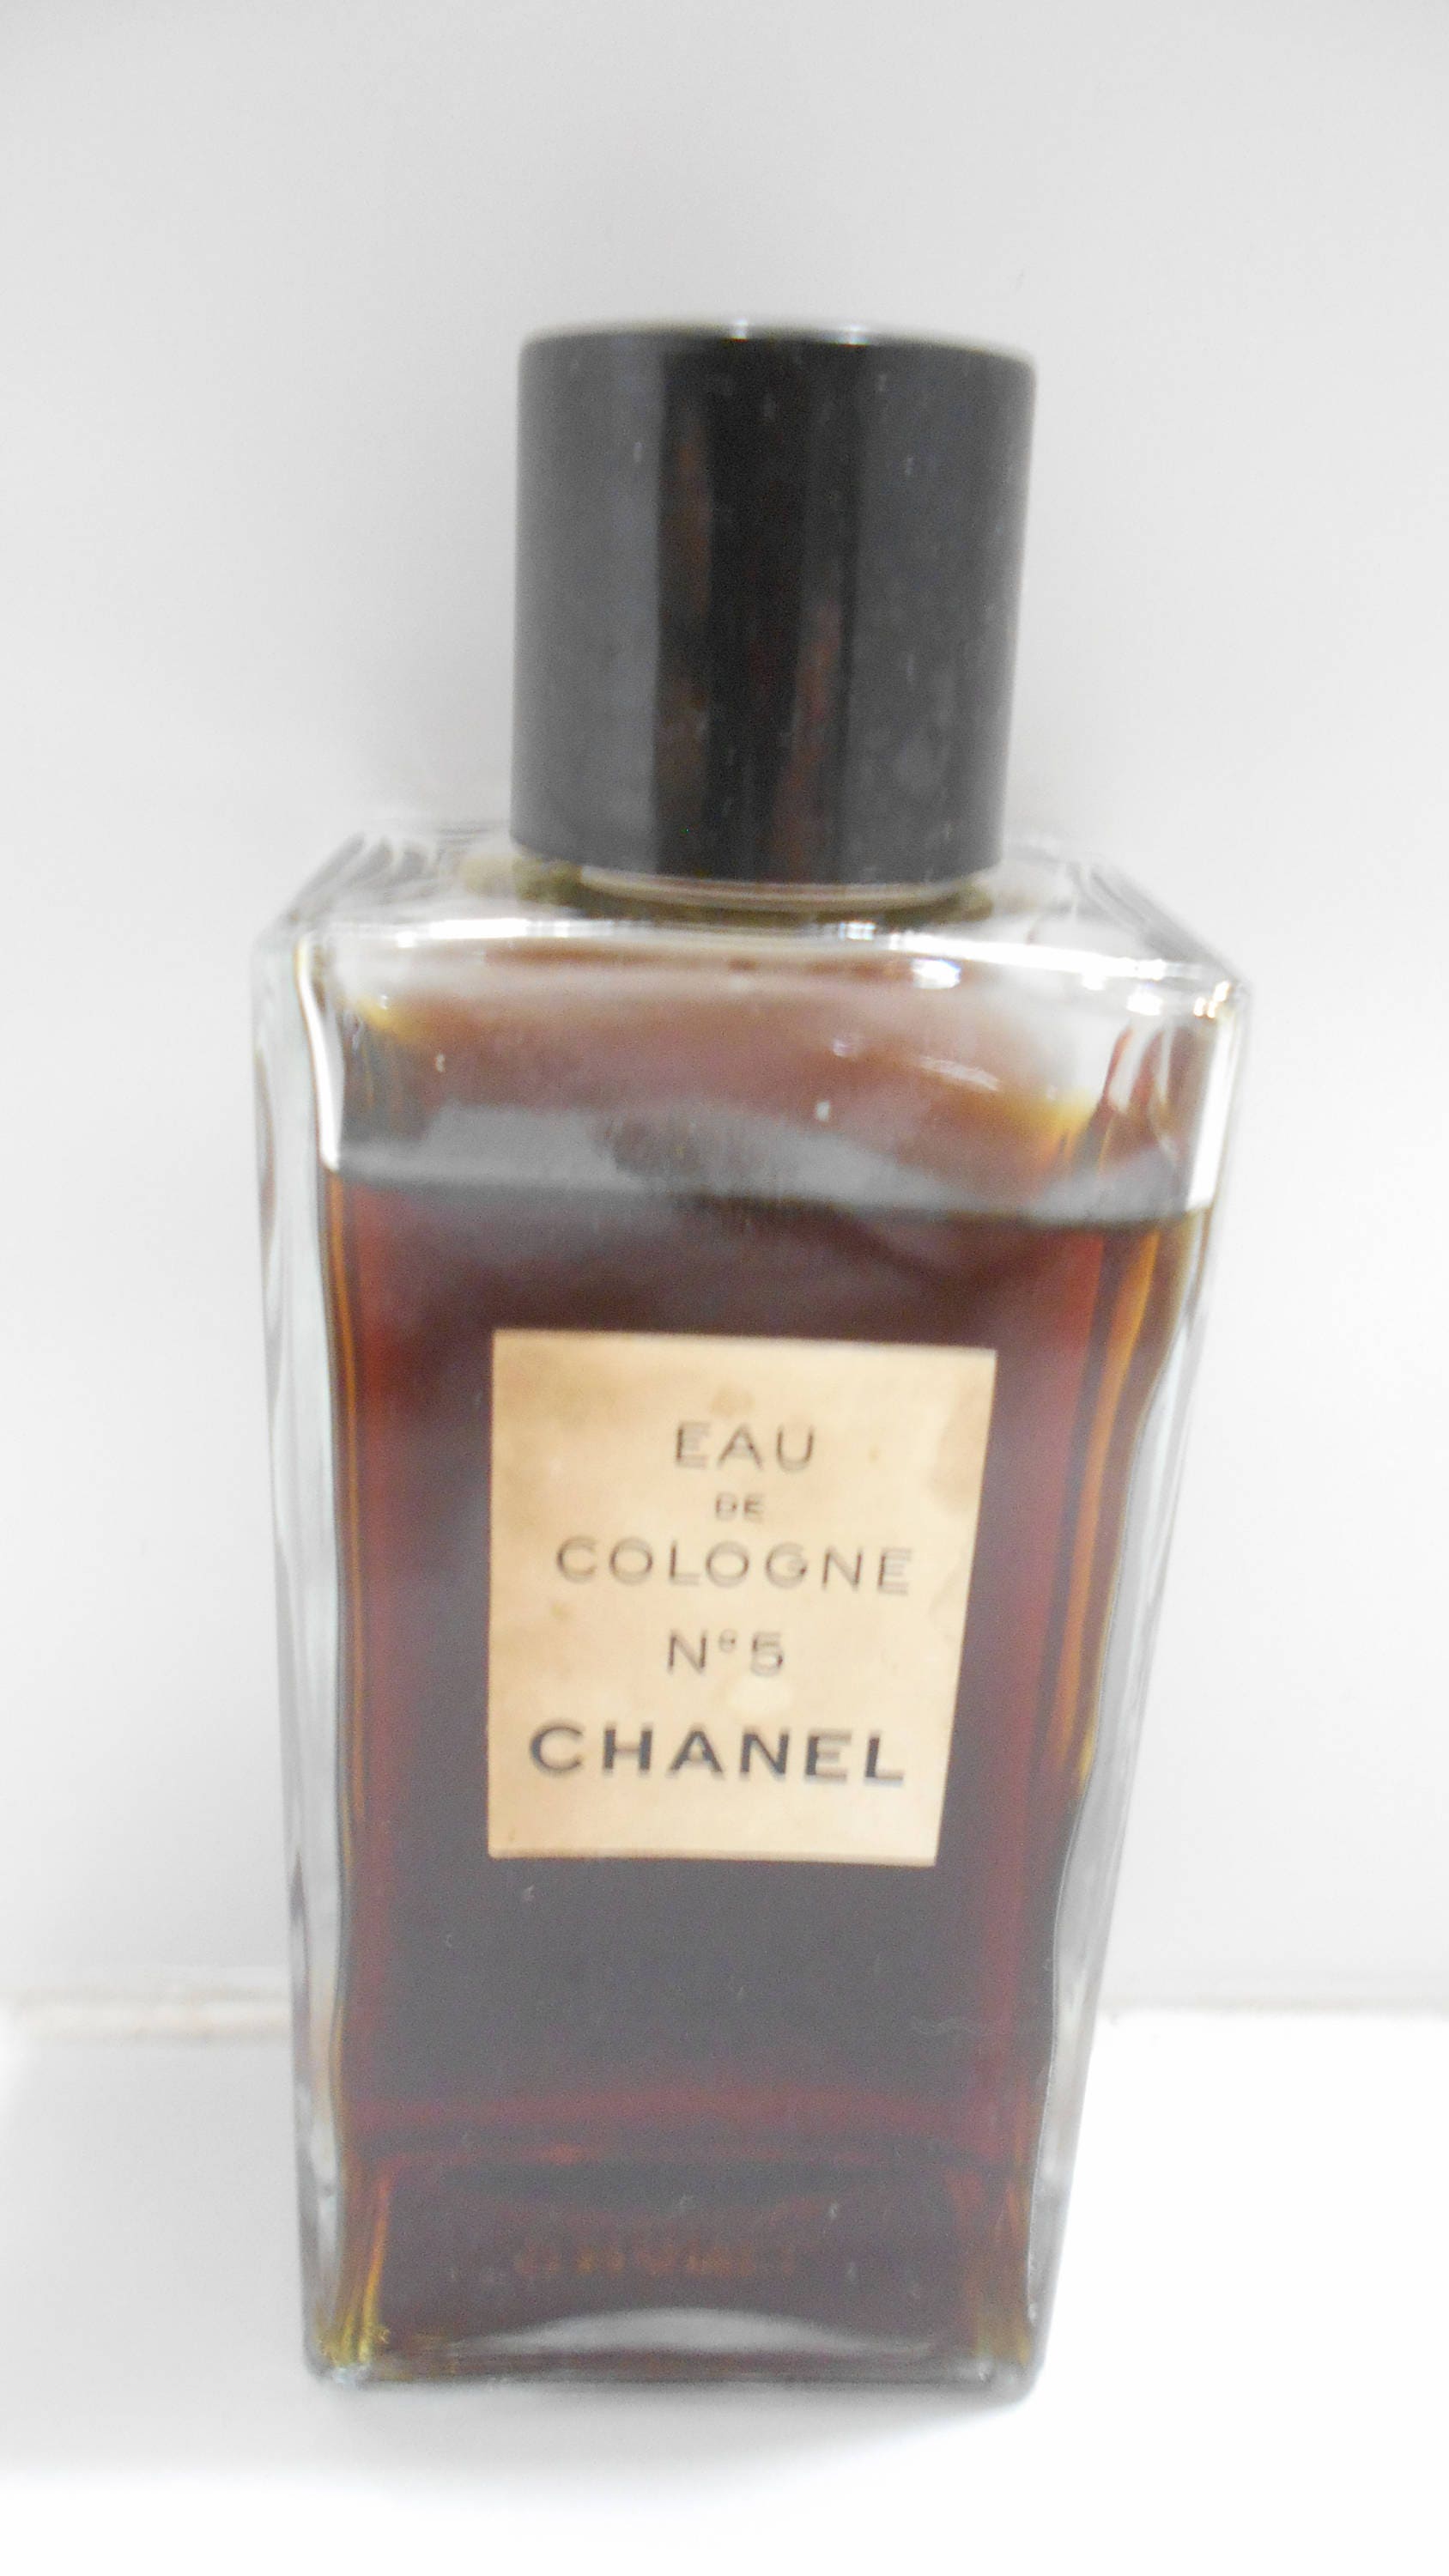 Chanel No 5 Eau de Cologne Splash 125 ml RARE Vintage Perfume Almost Full